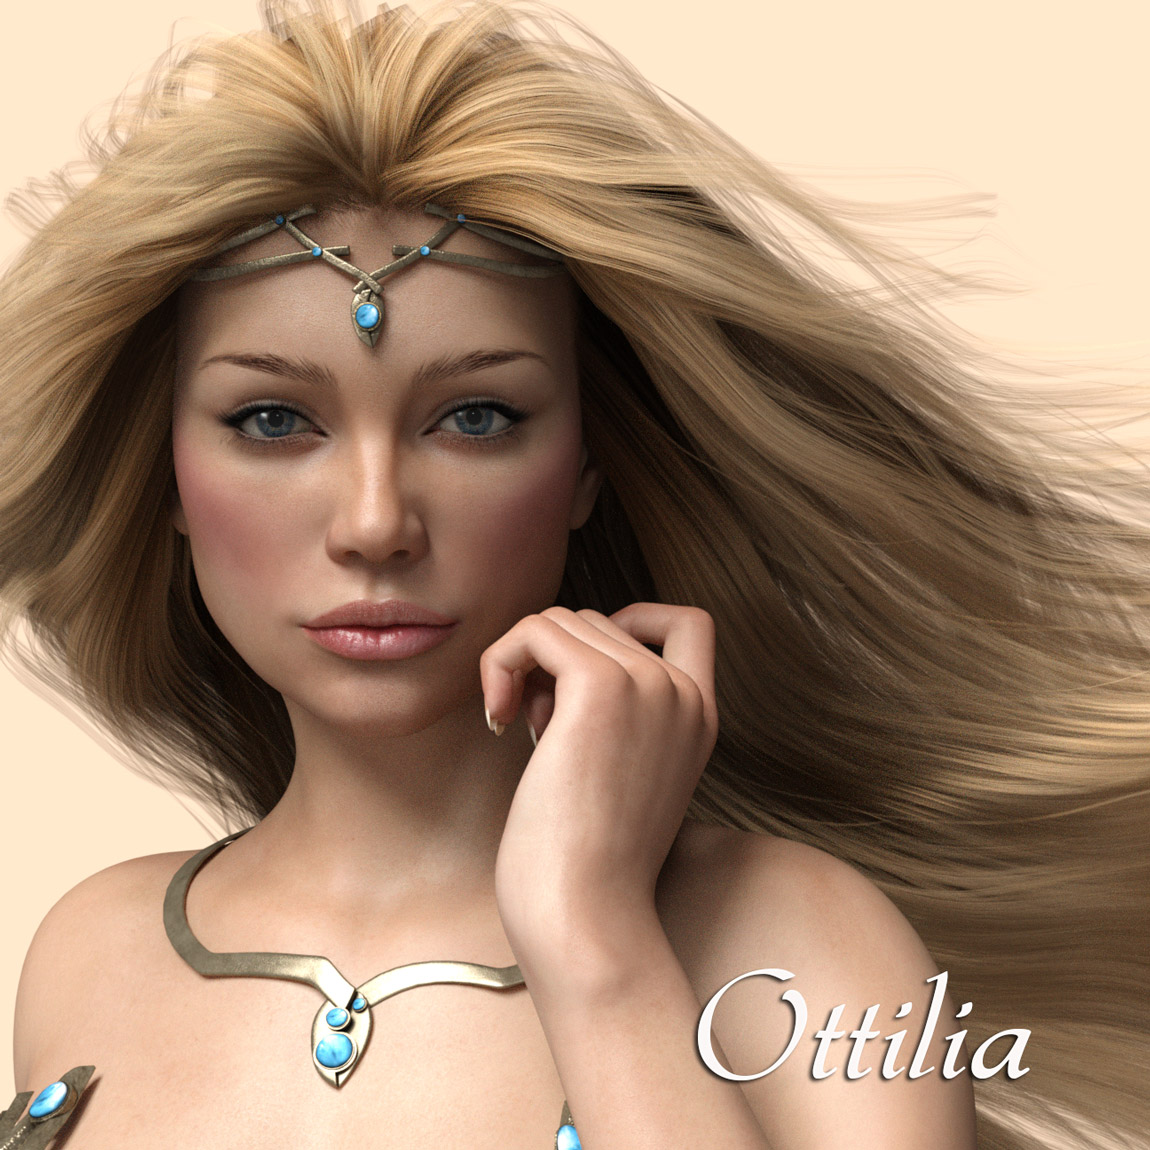 Ottilia for G3F